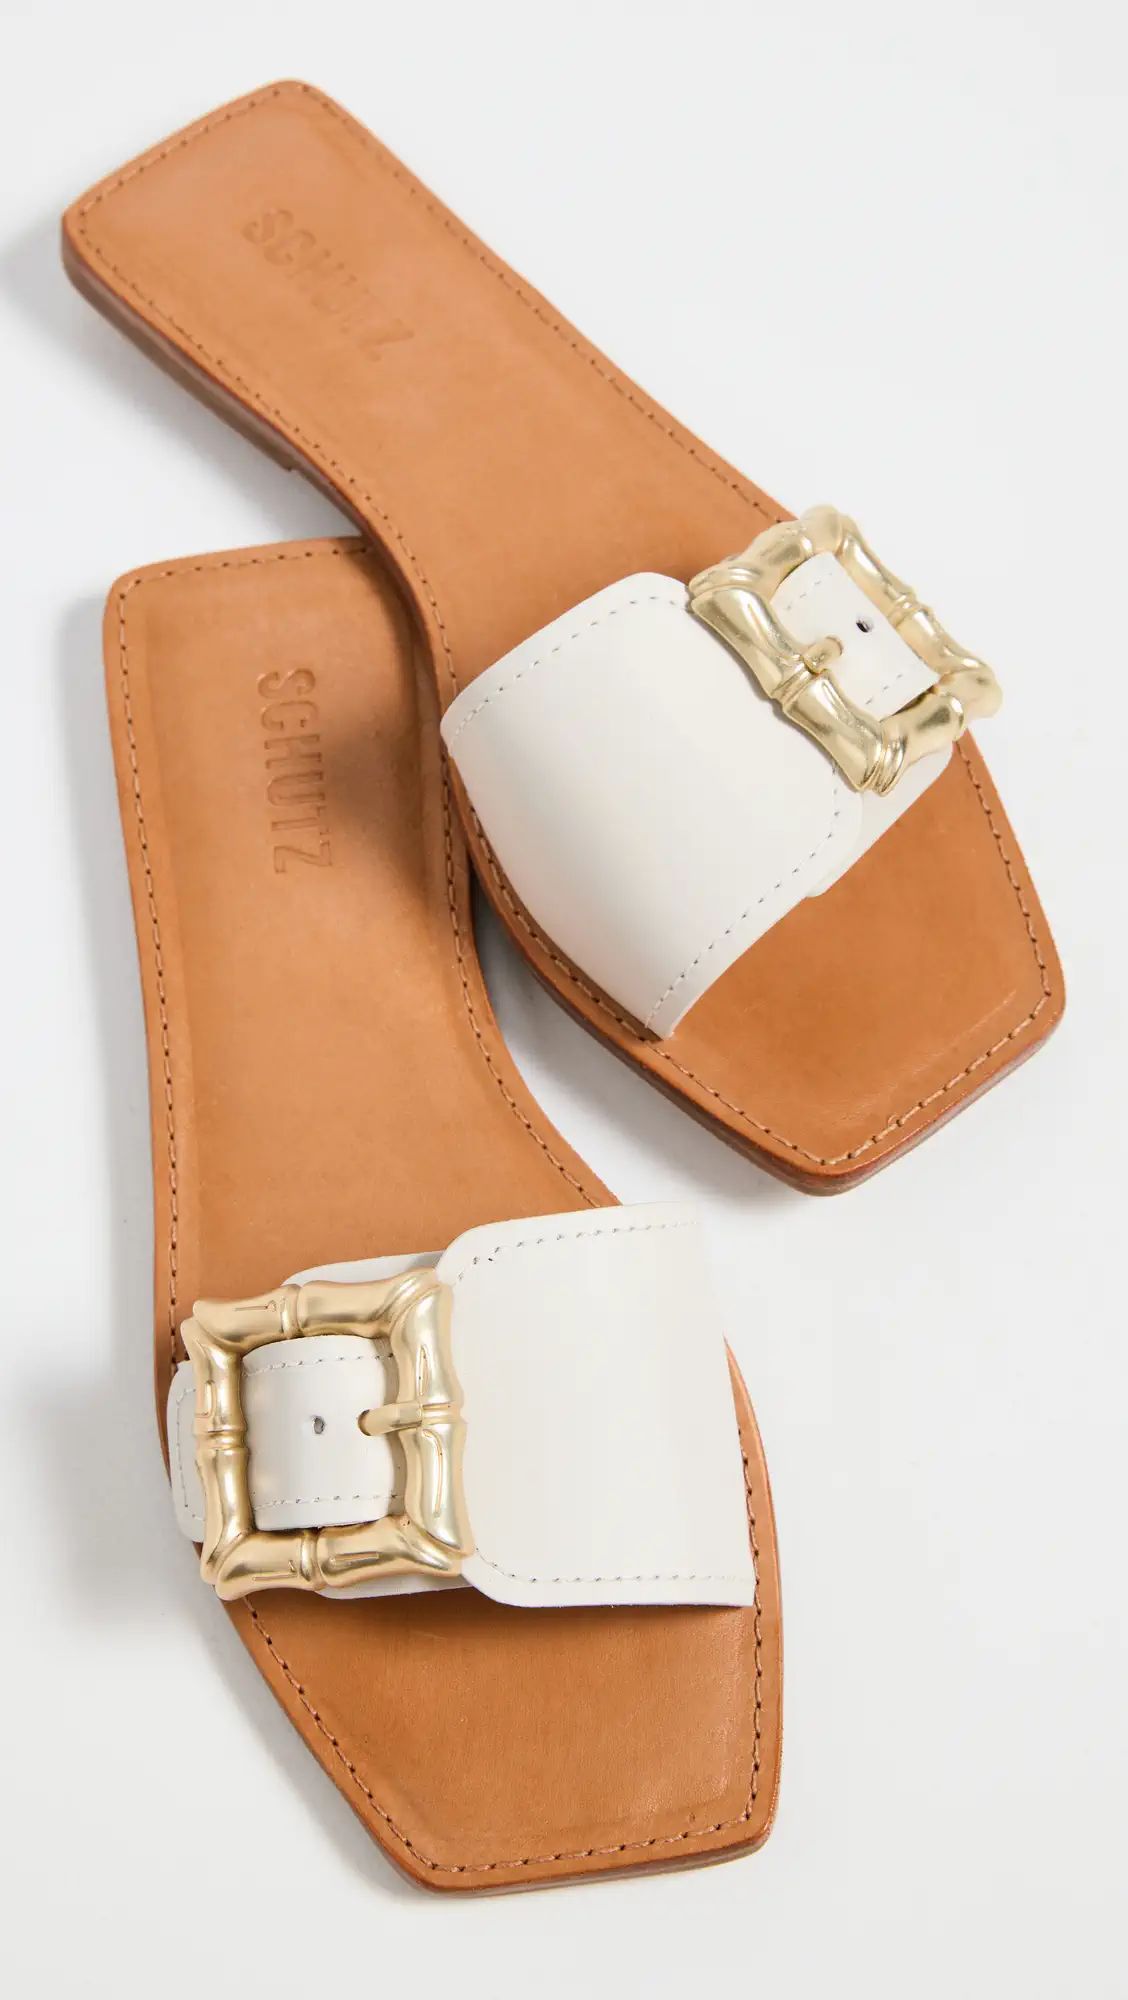 Enola Sandals | Shopbop